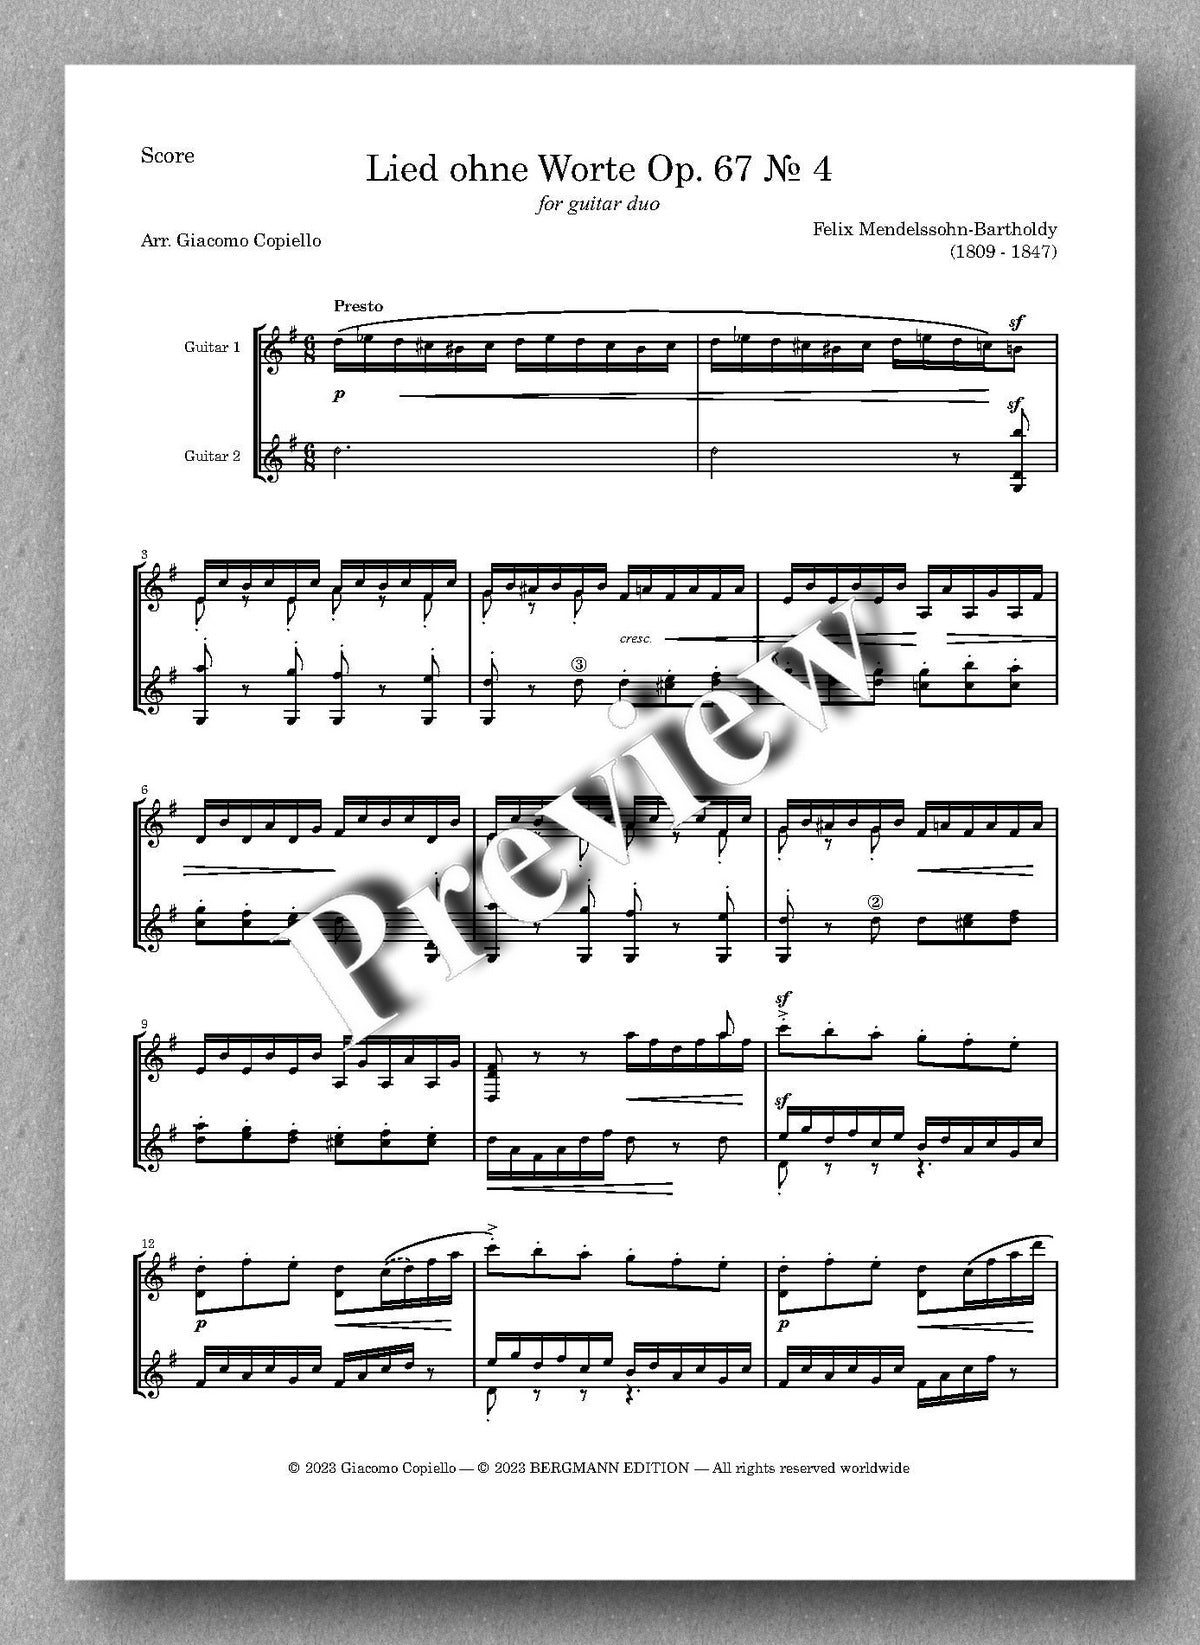 Lieder vol. 4, by Felix Mendelssohn - preview of the music score 3